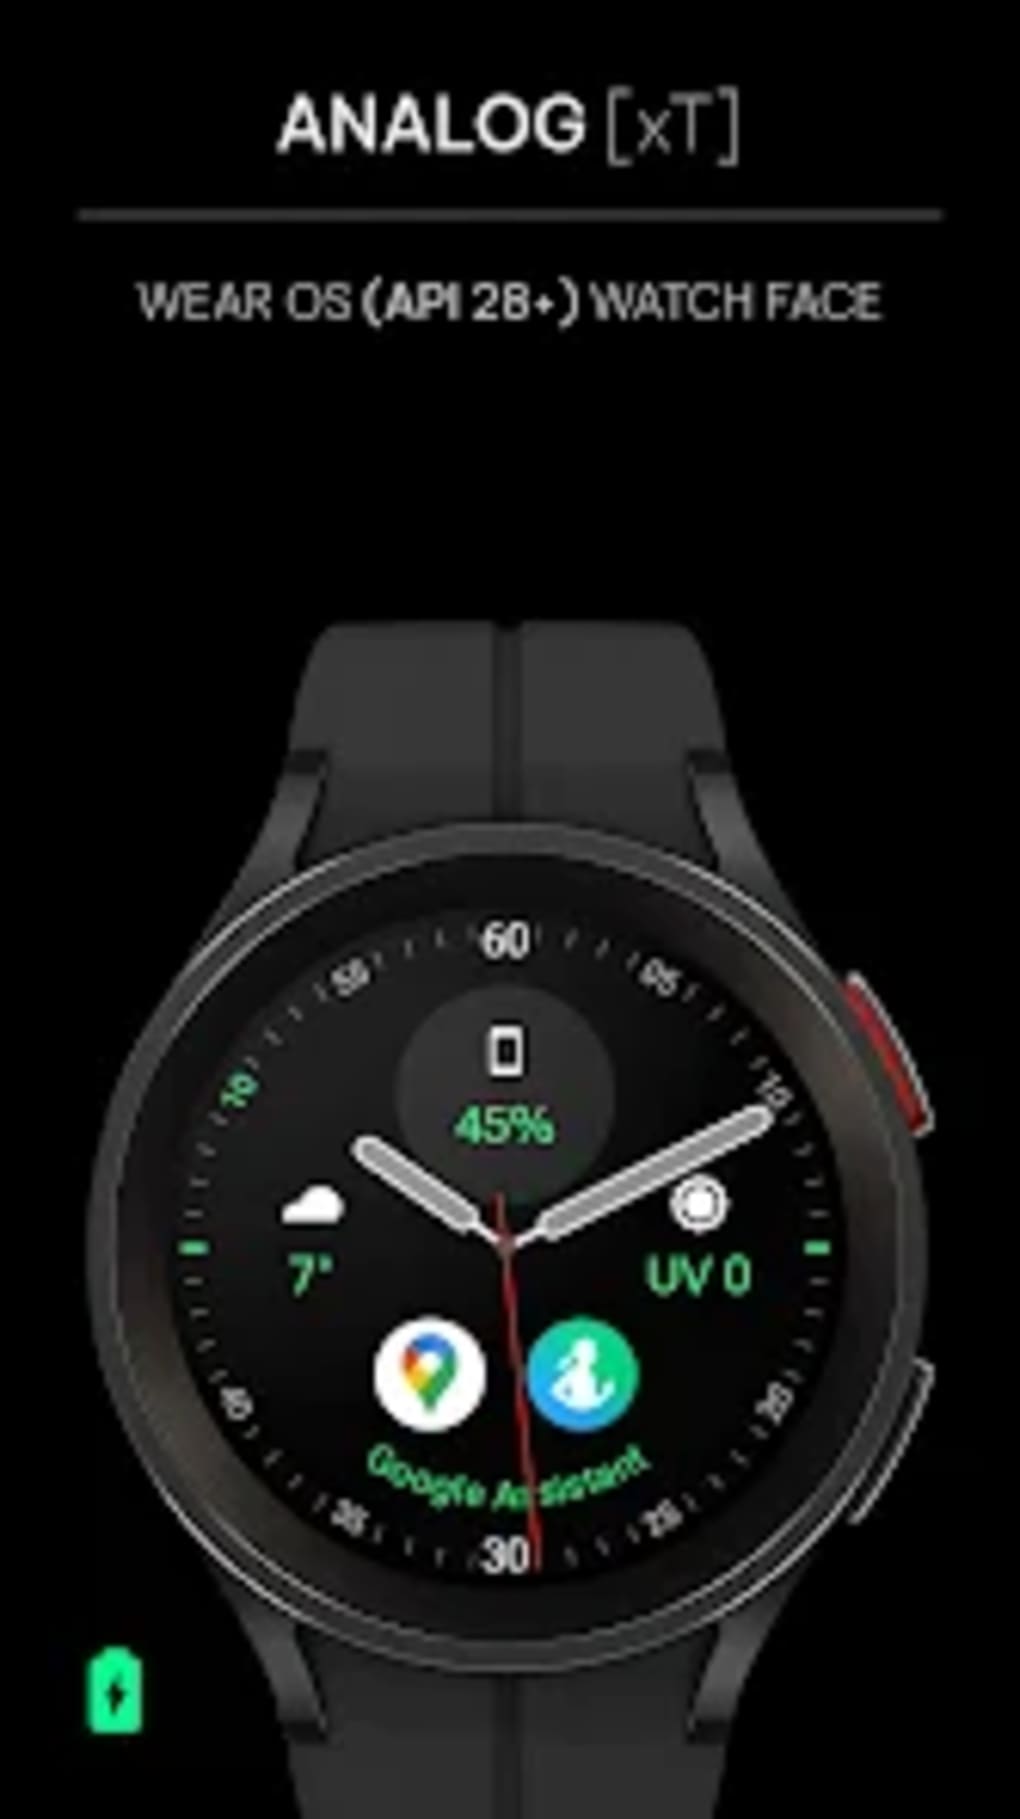 awf-analog-xt-watch-face-para-android-download